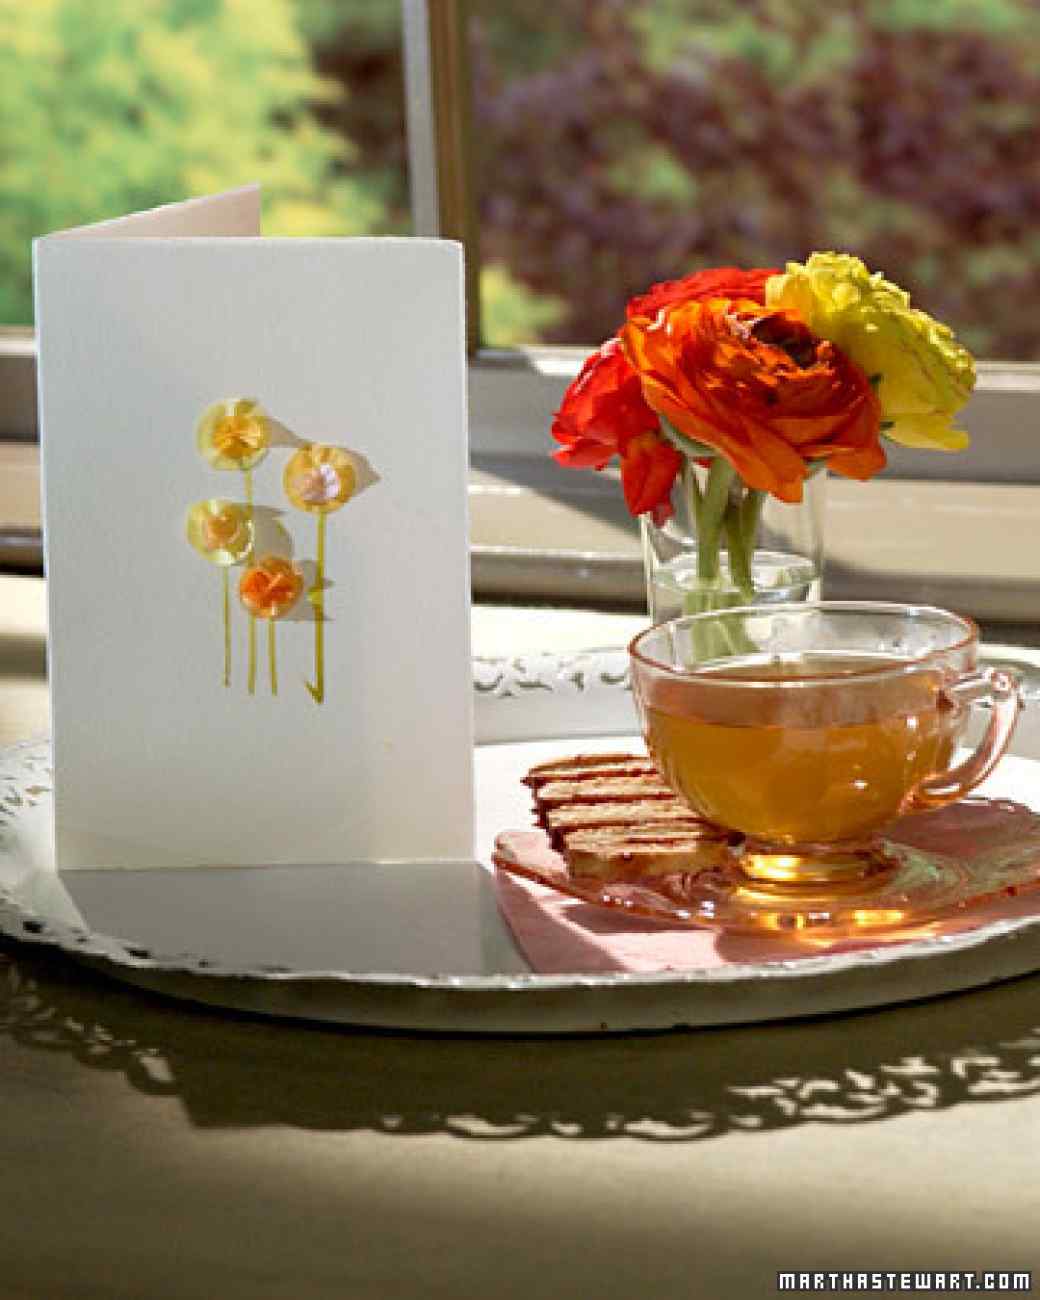  Anyák napja szövet virág kártya / 25 + papír virág kézműves